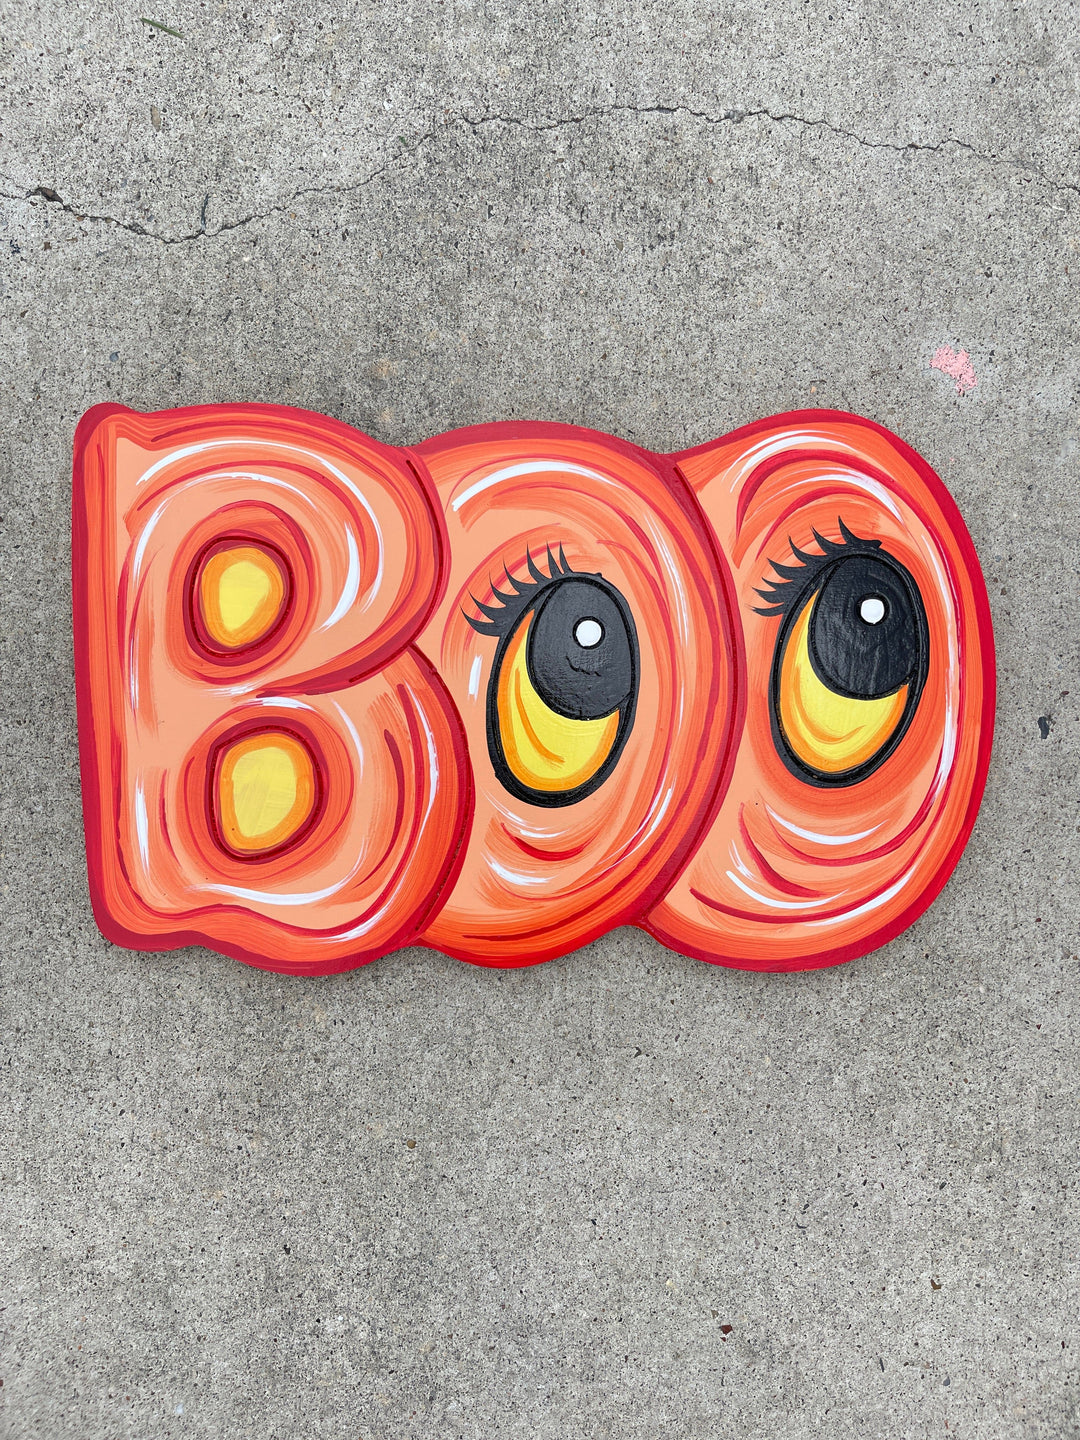 BOO Letters Halloween Yard Art Decoration